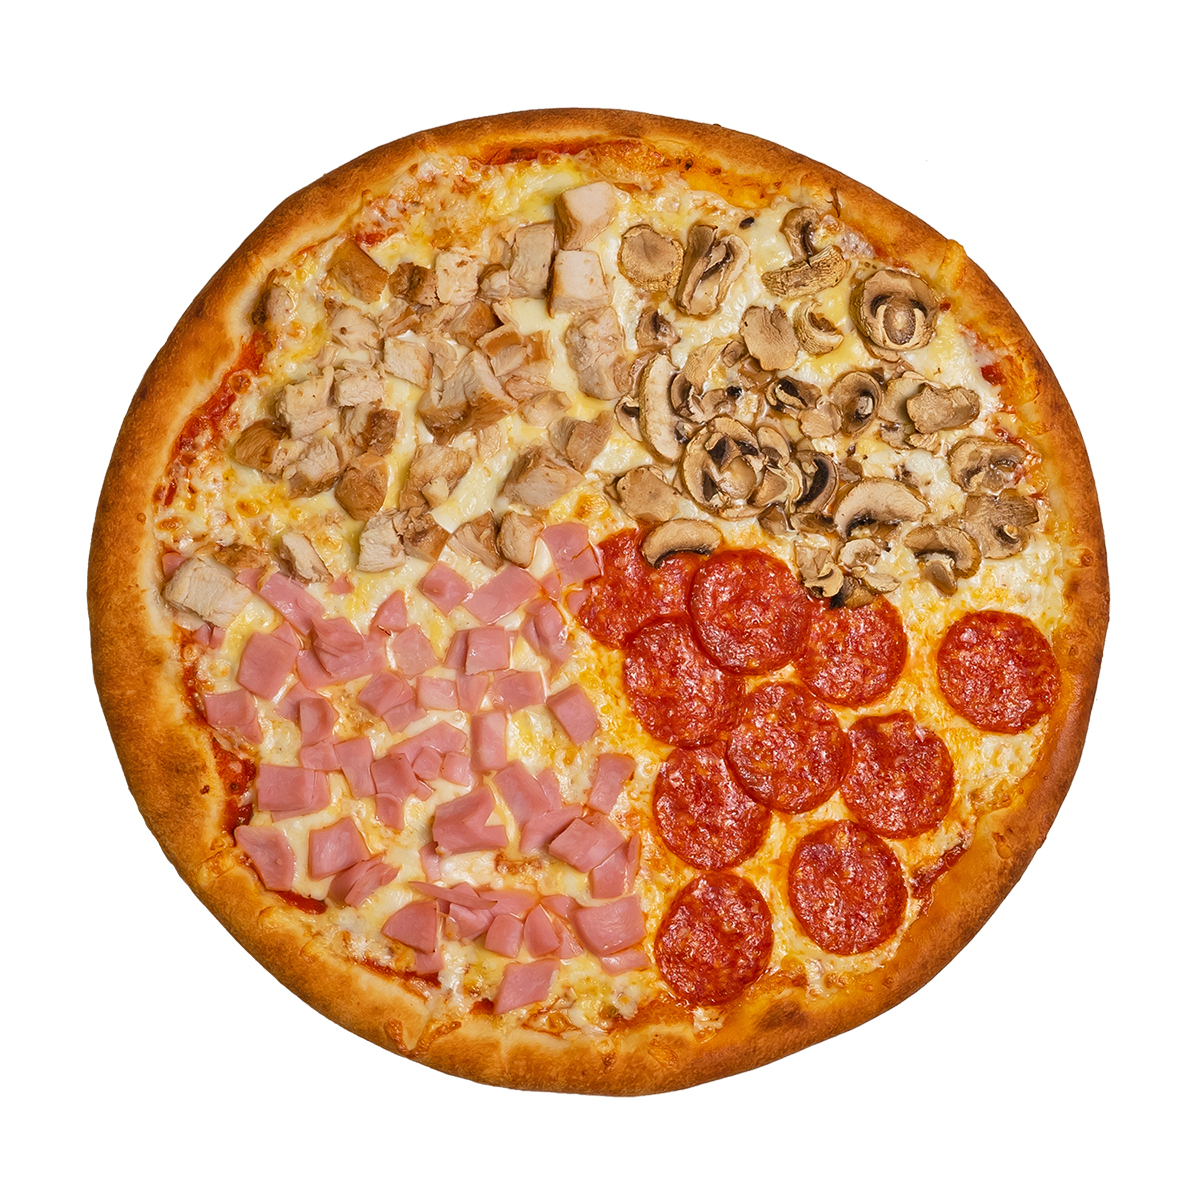 пицца четыре сезона рецепт с фото пошагово фото 115